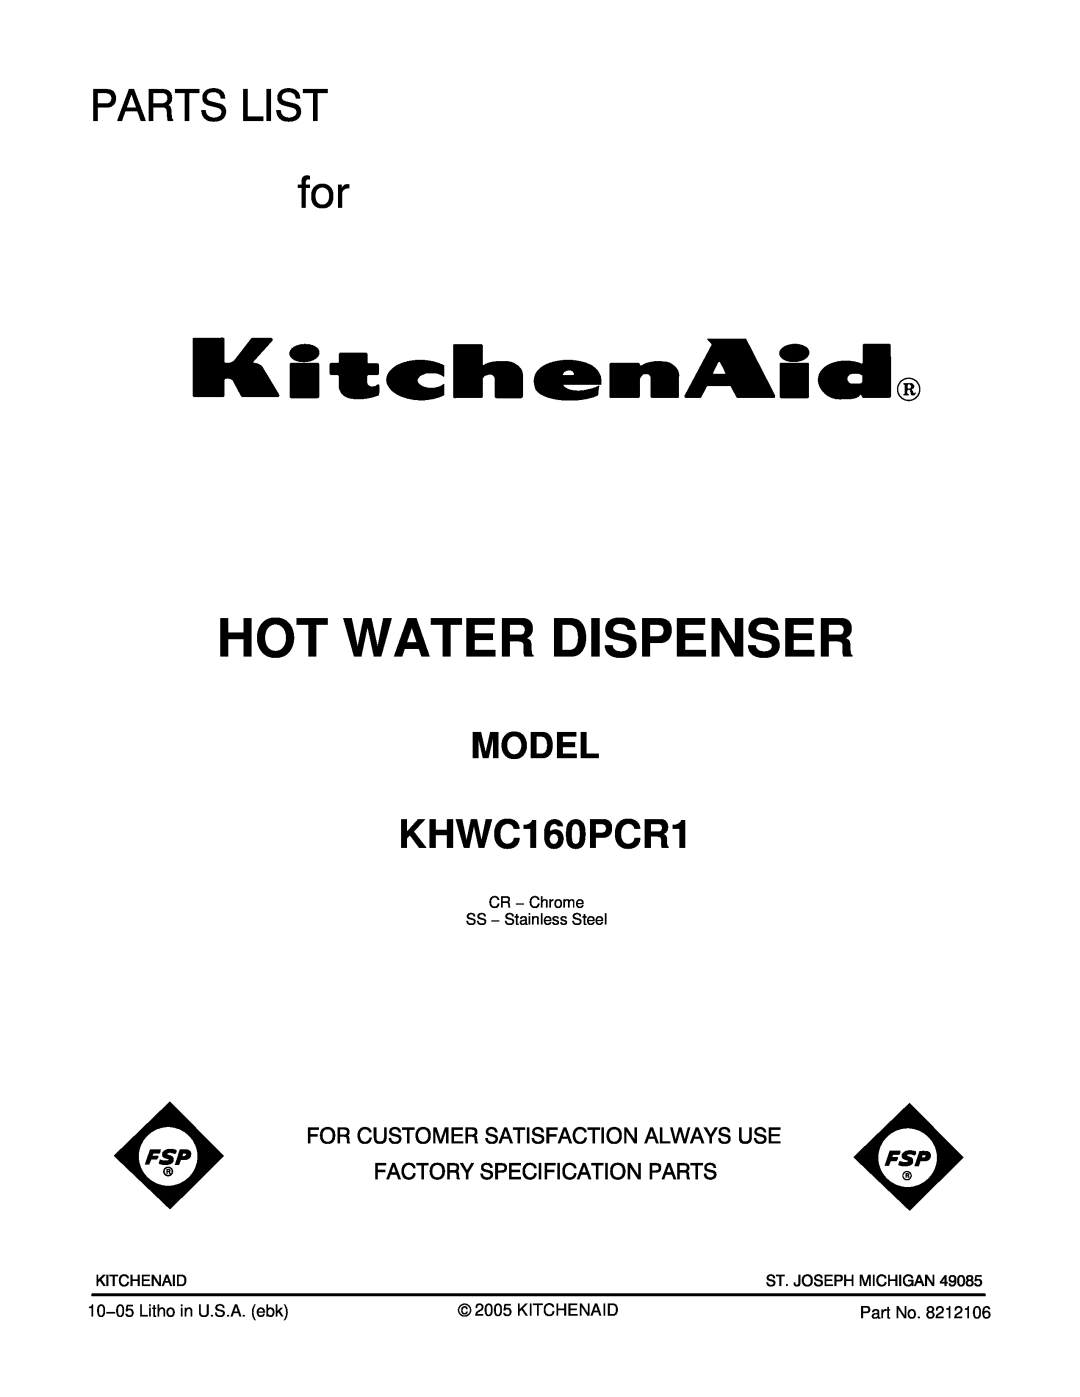 KitchenAid KHWC160PCR1 manual Hot Water Dispenser, Model, CR − Chrome SS − Stainless Steel 